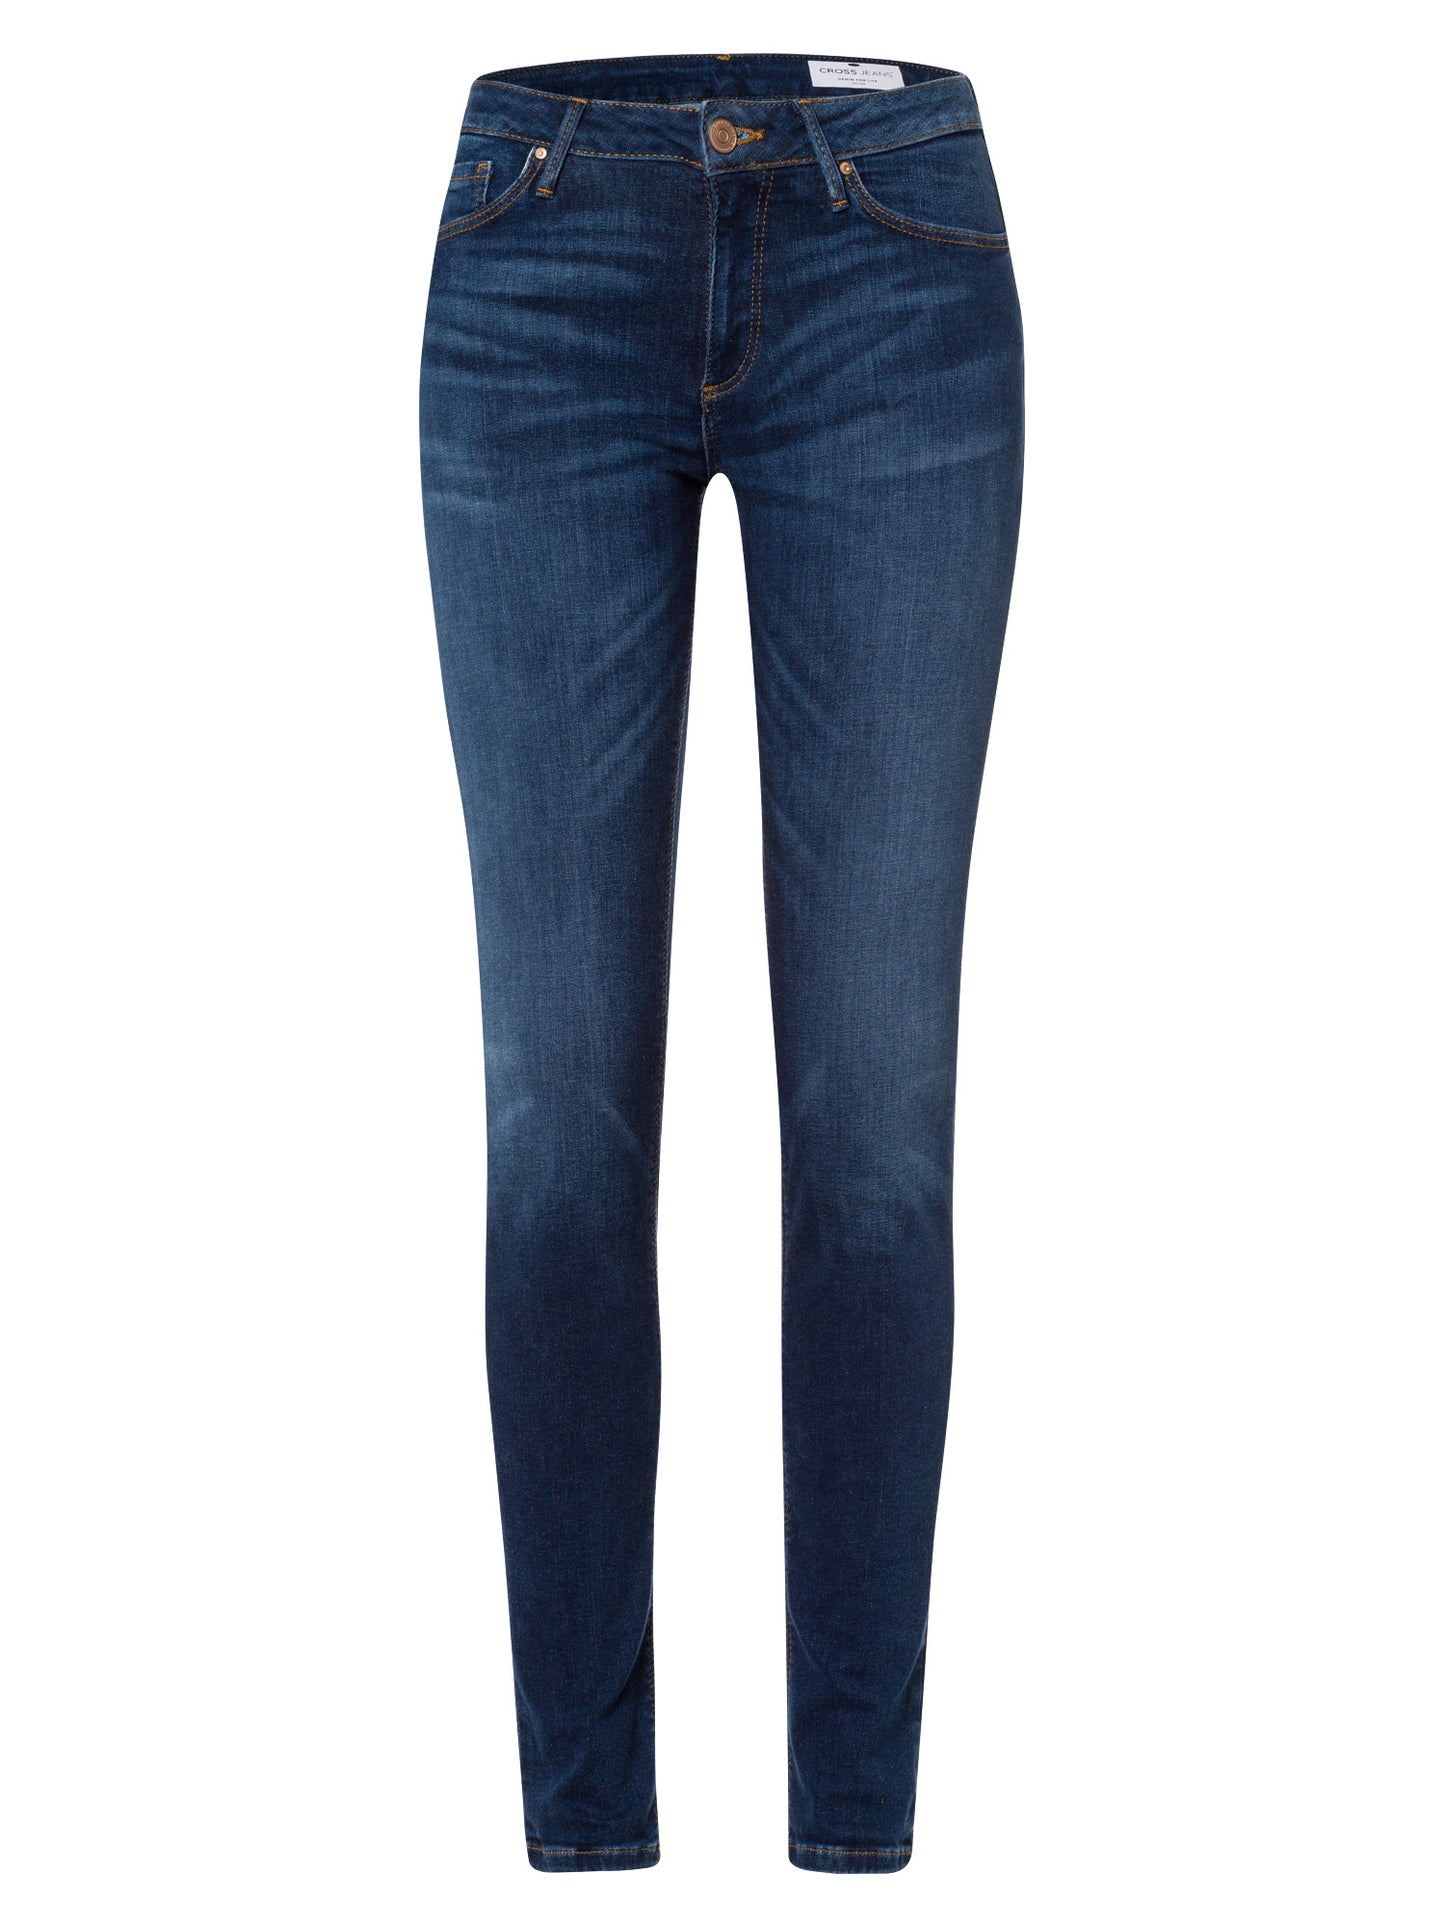 Alan women's jeans skinny fit high waist dark blue